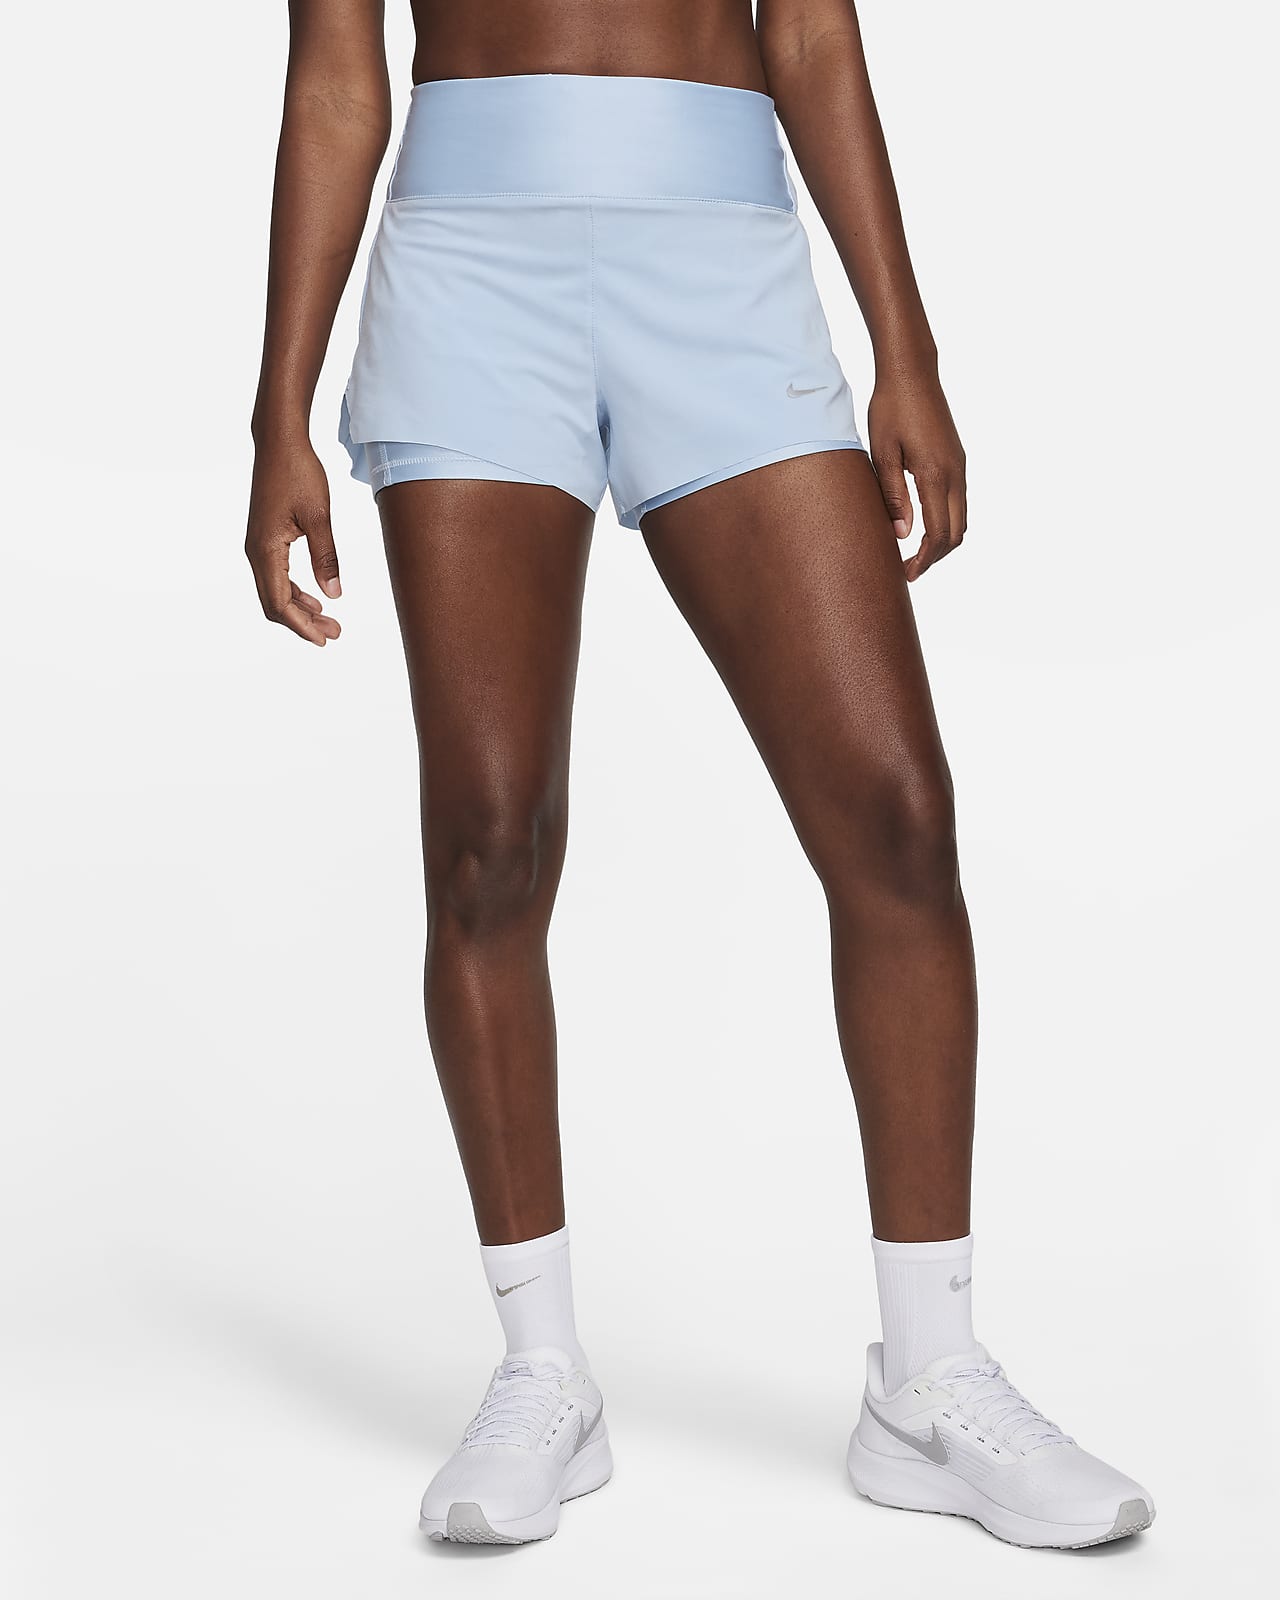 Nike Women's Swift Pant